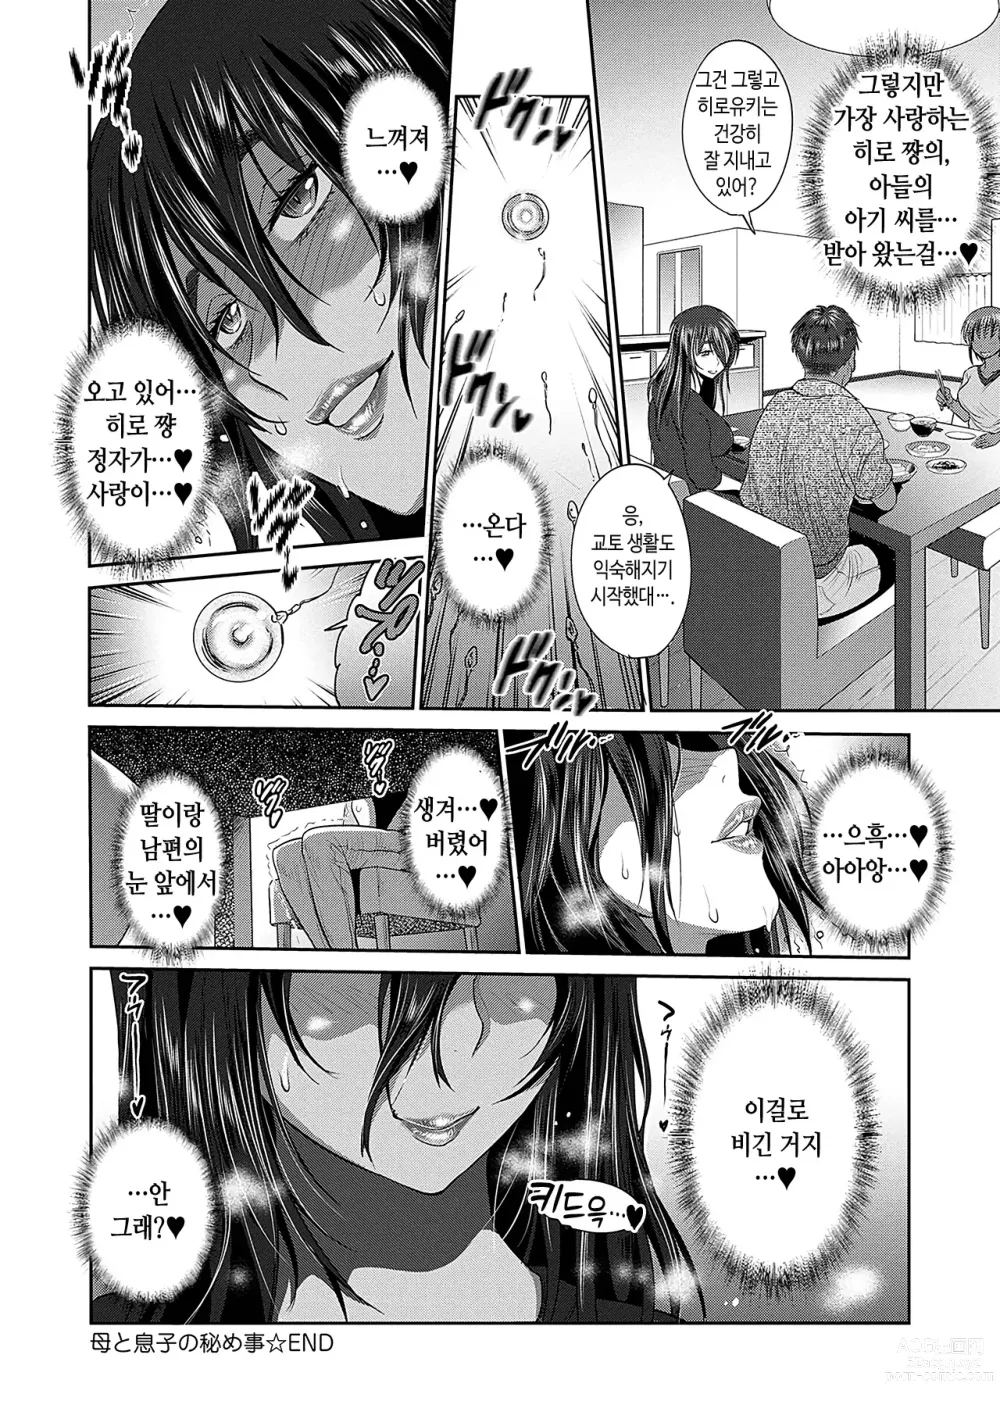 Page 292 of manga 히나타♡히나타 plus